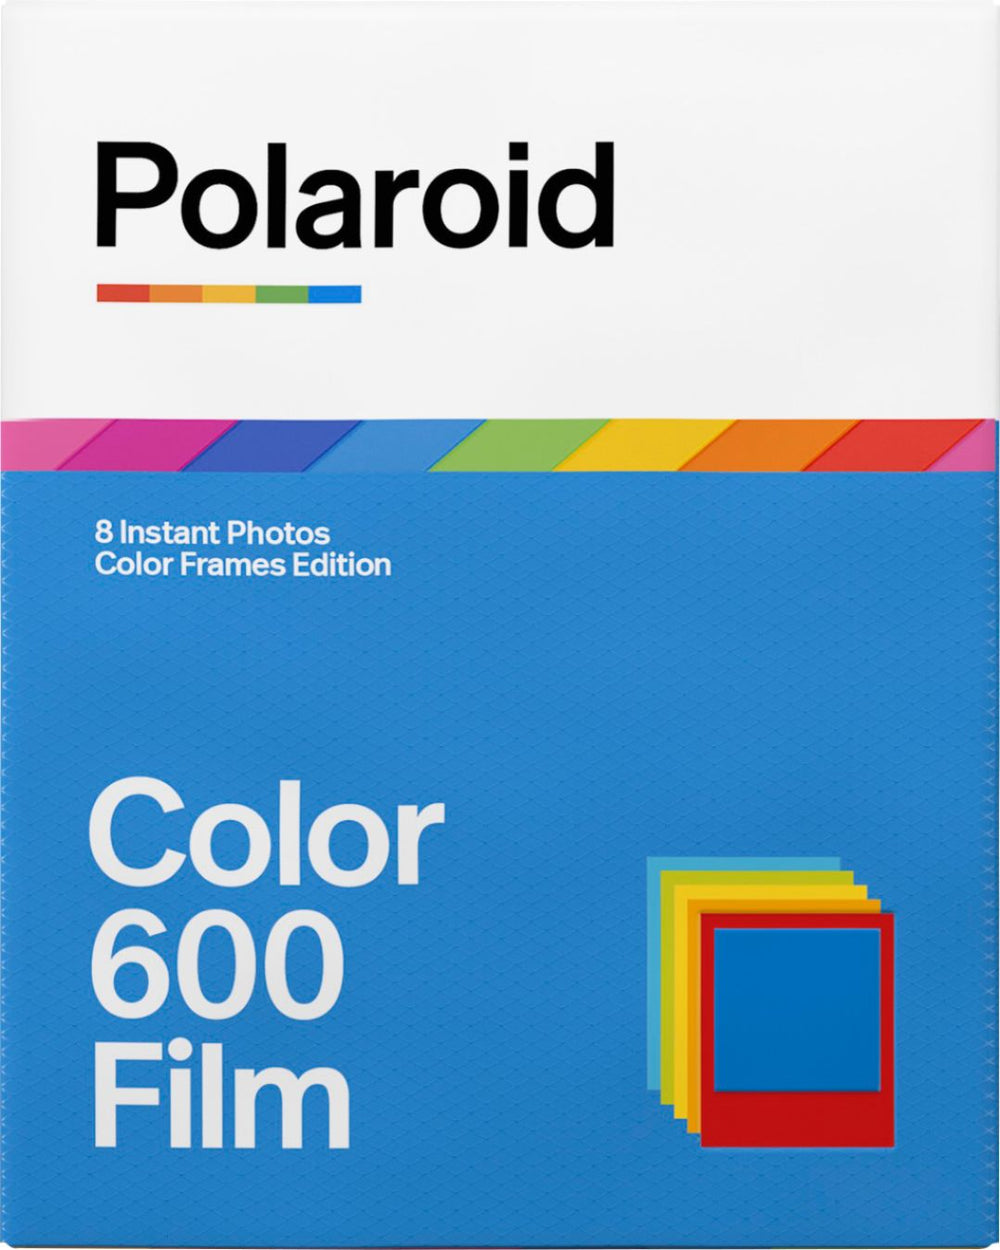 Polaroid - Color 600 Film - Color Frames_1